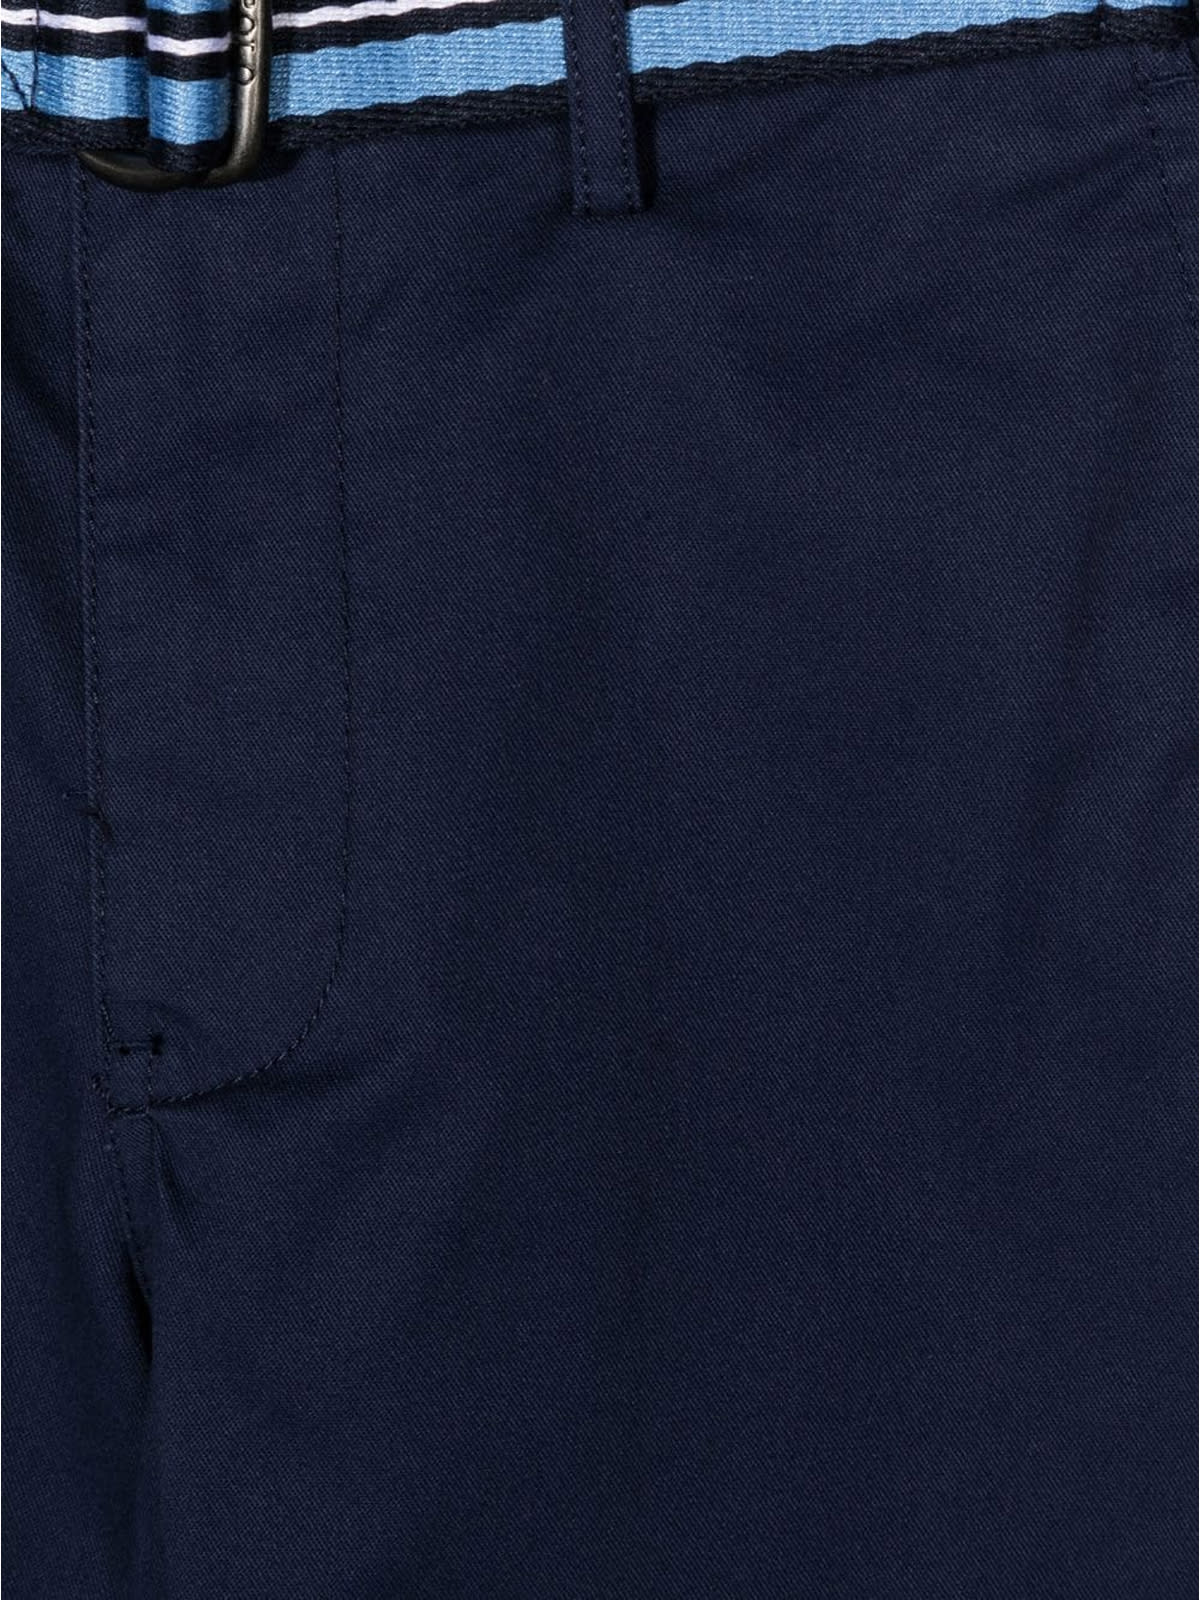 Shop Polo Ralph Lauren Bedford Shrt Shorts Flat Front In Newport Navy